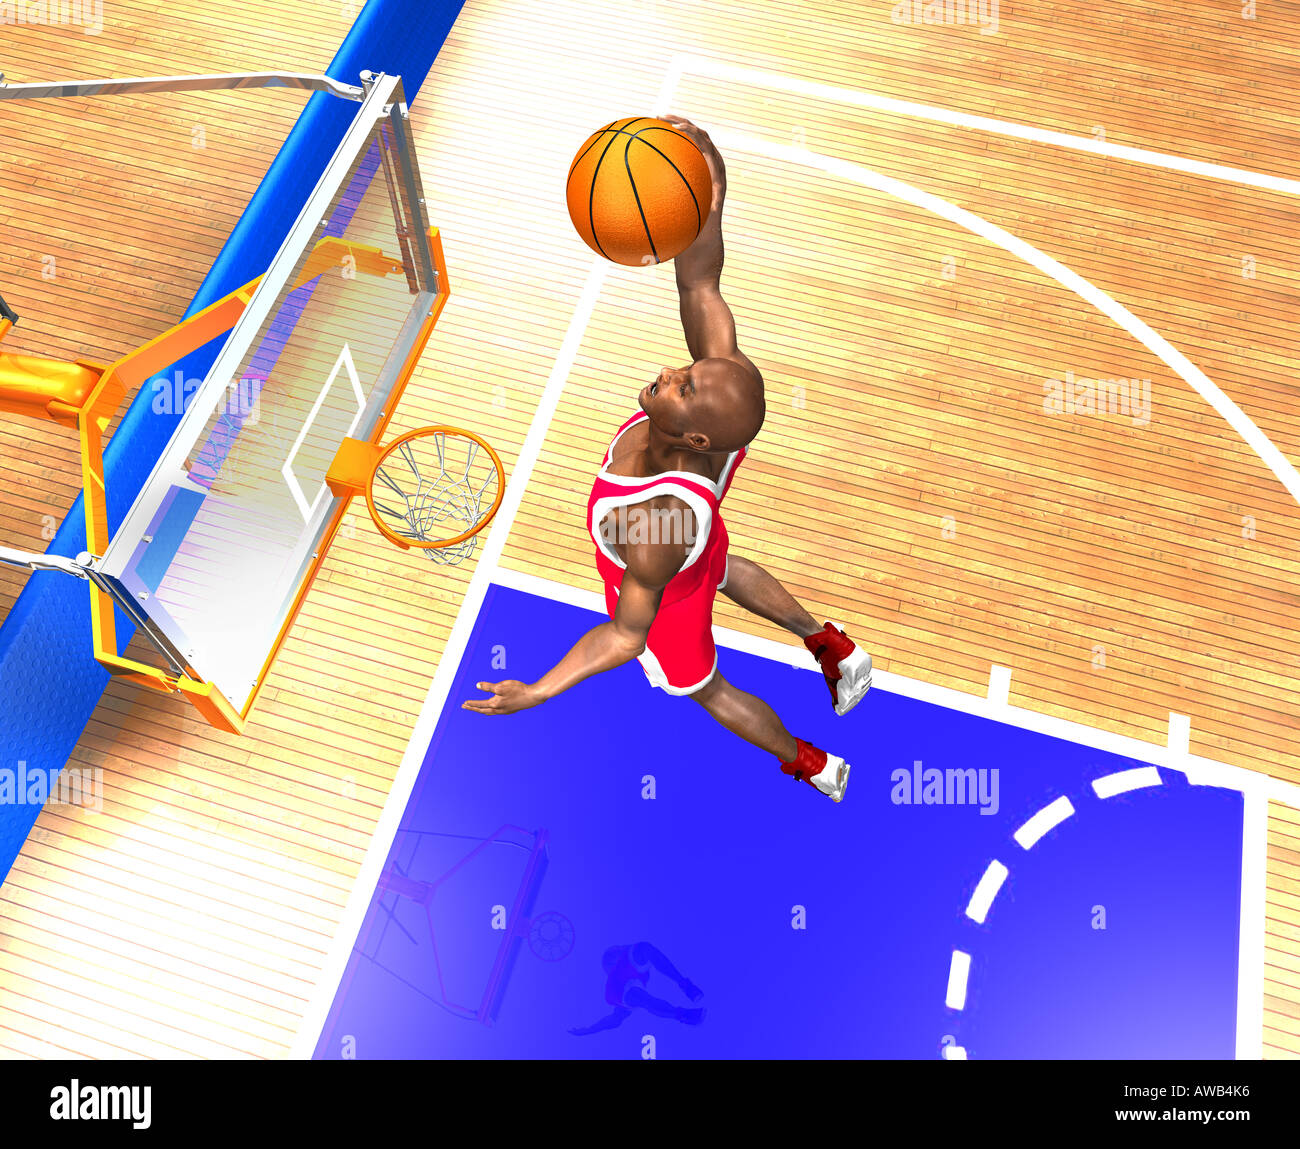 Basket-ball player jumping high Banque D'Images